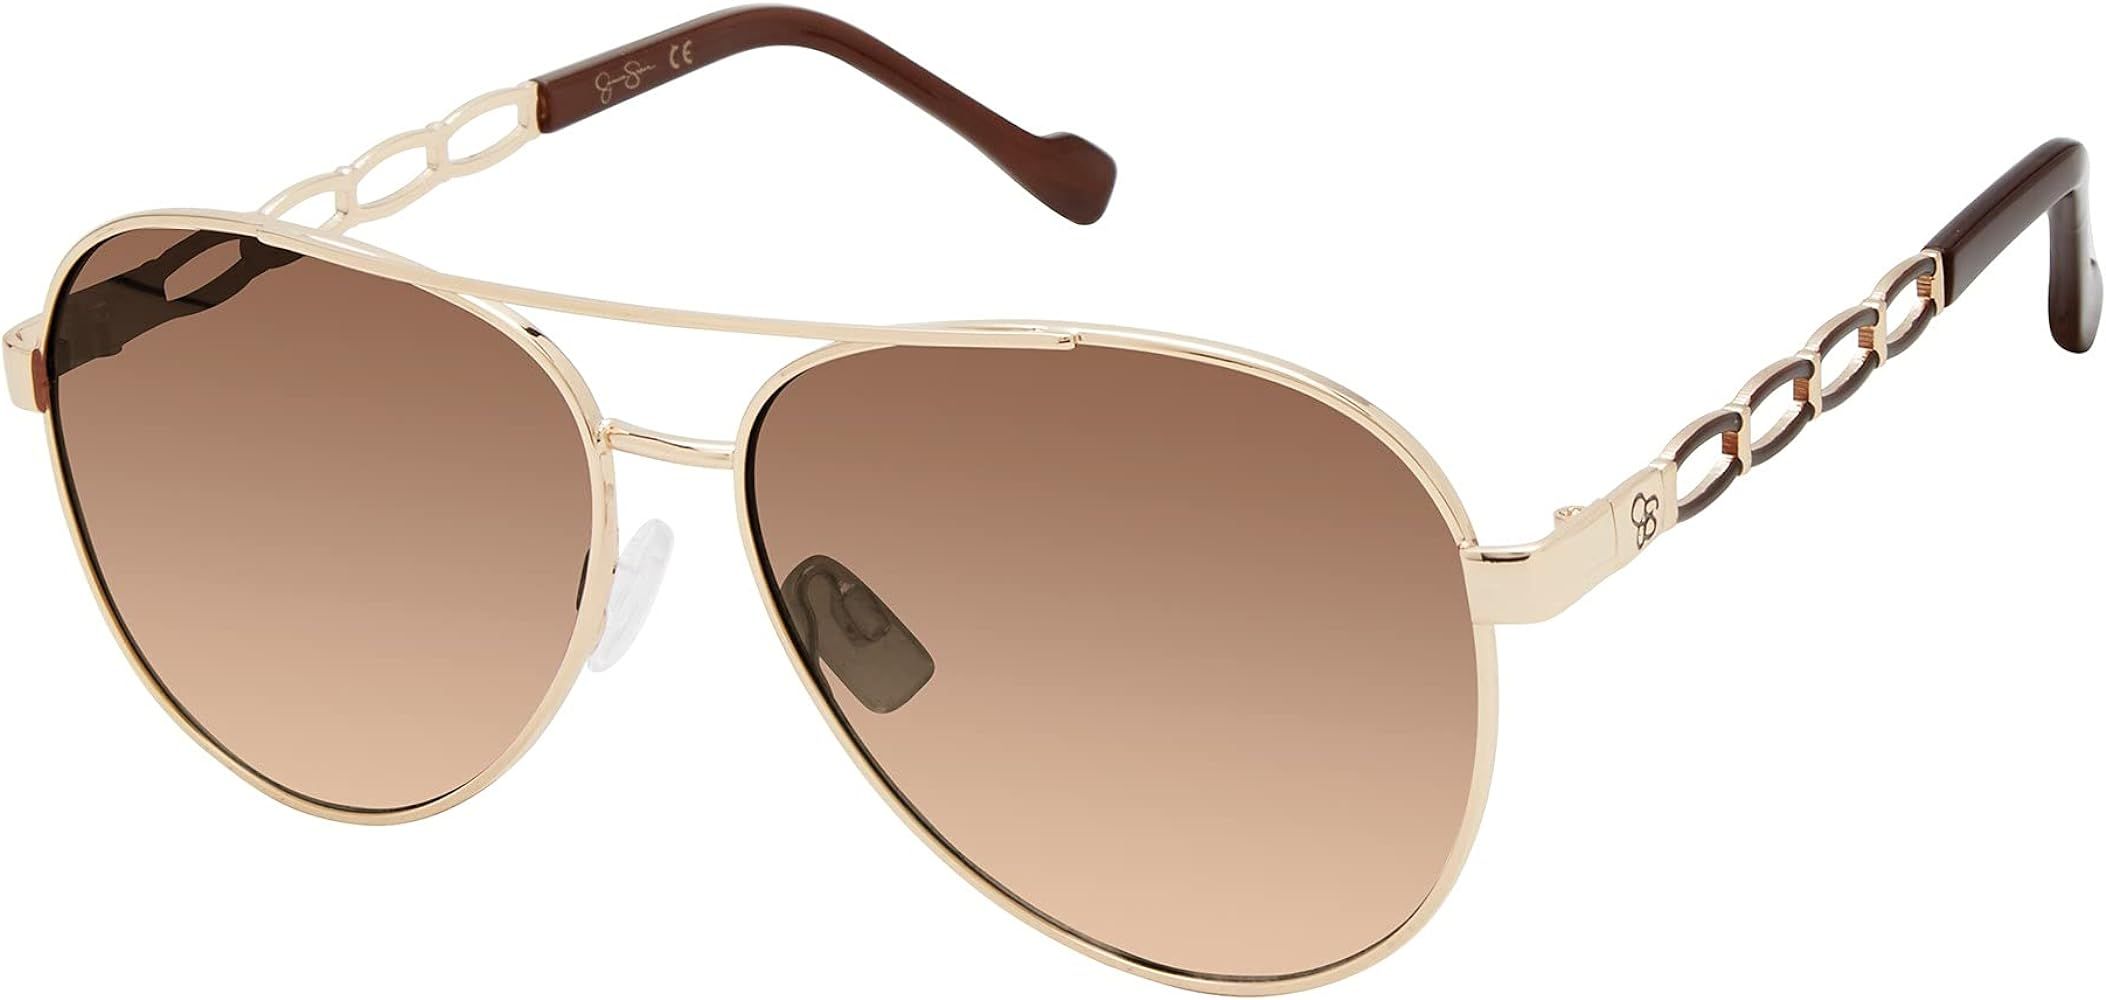 Jessica Simpson J5856 Metal Chain UV Protective Women's Aviator Sunglasses. Glam Gifts for Women, 60 | Amazon (US)